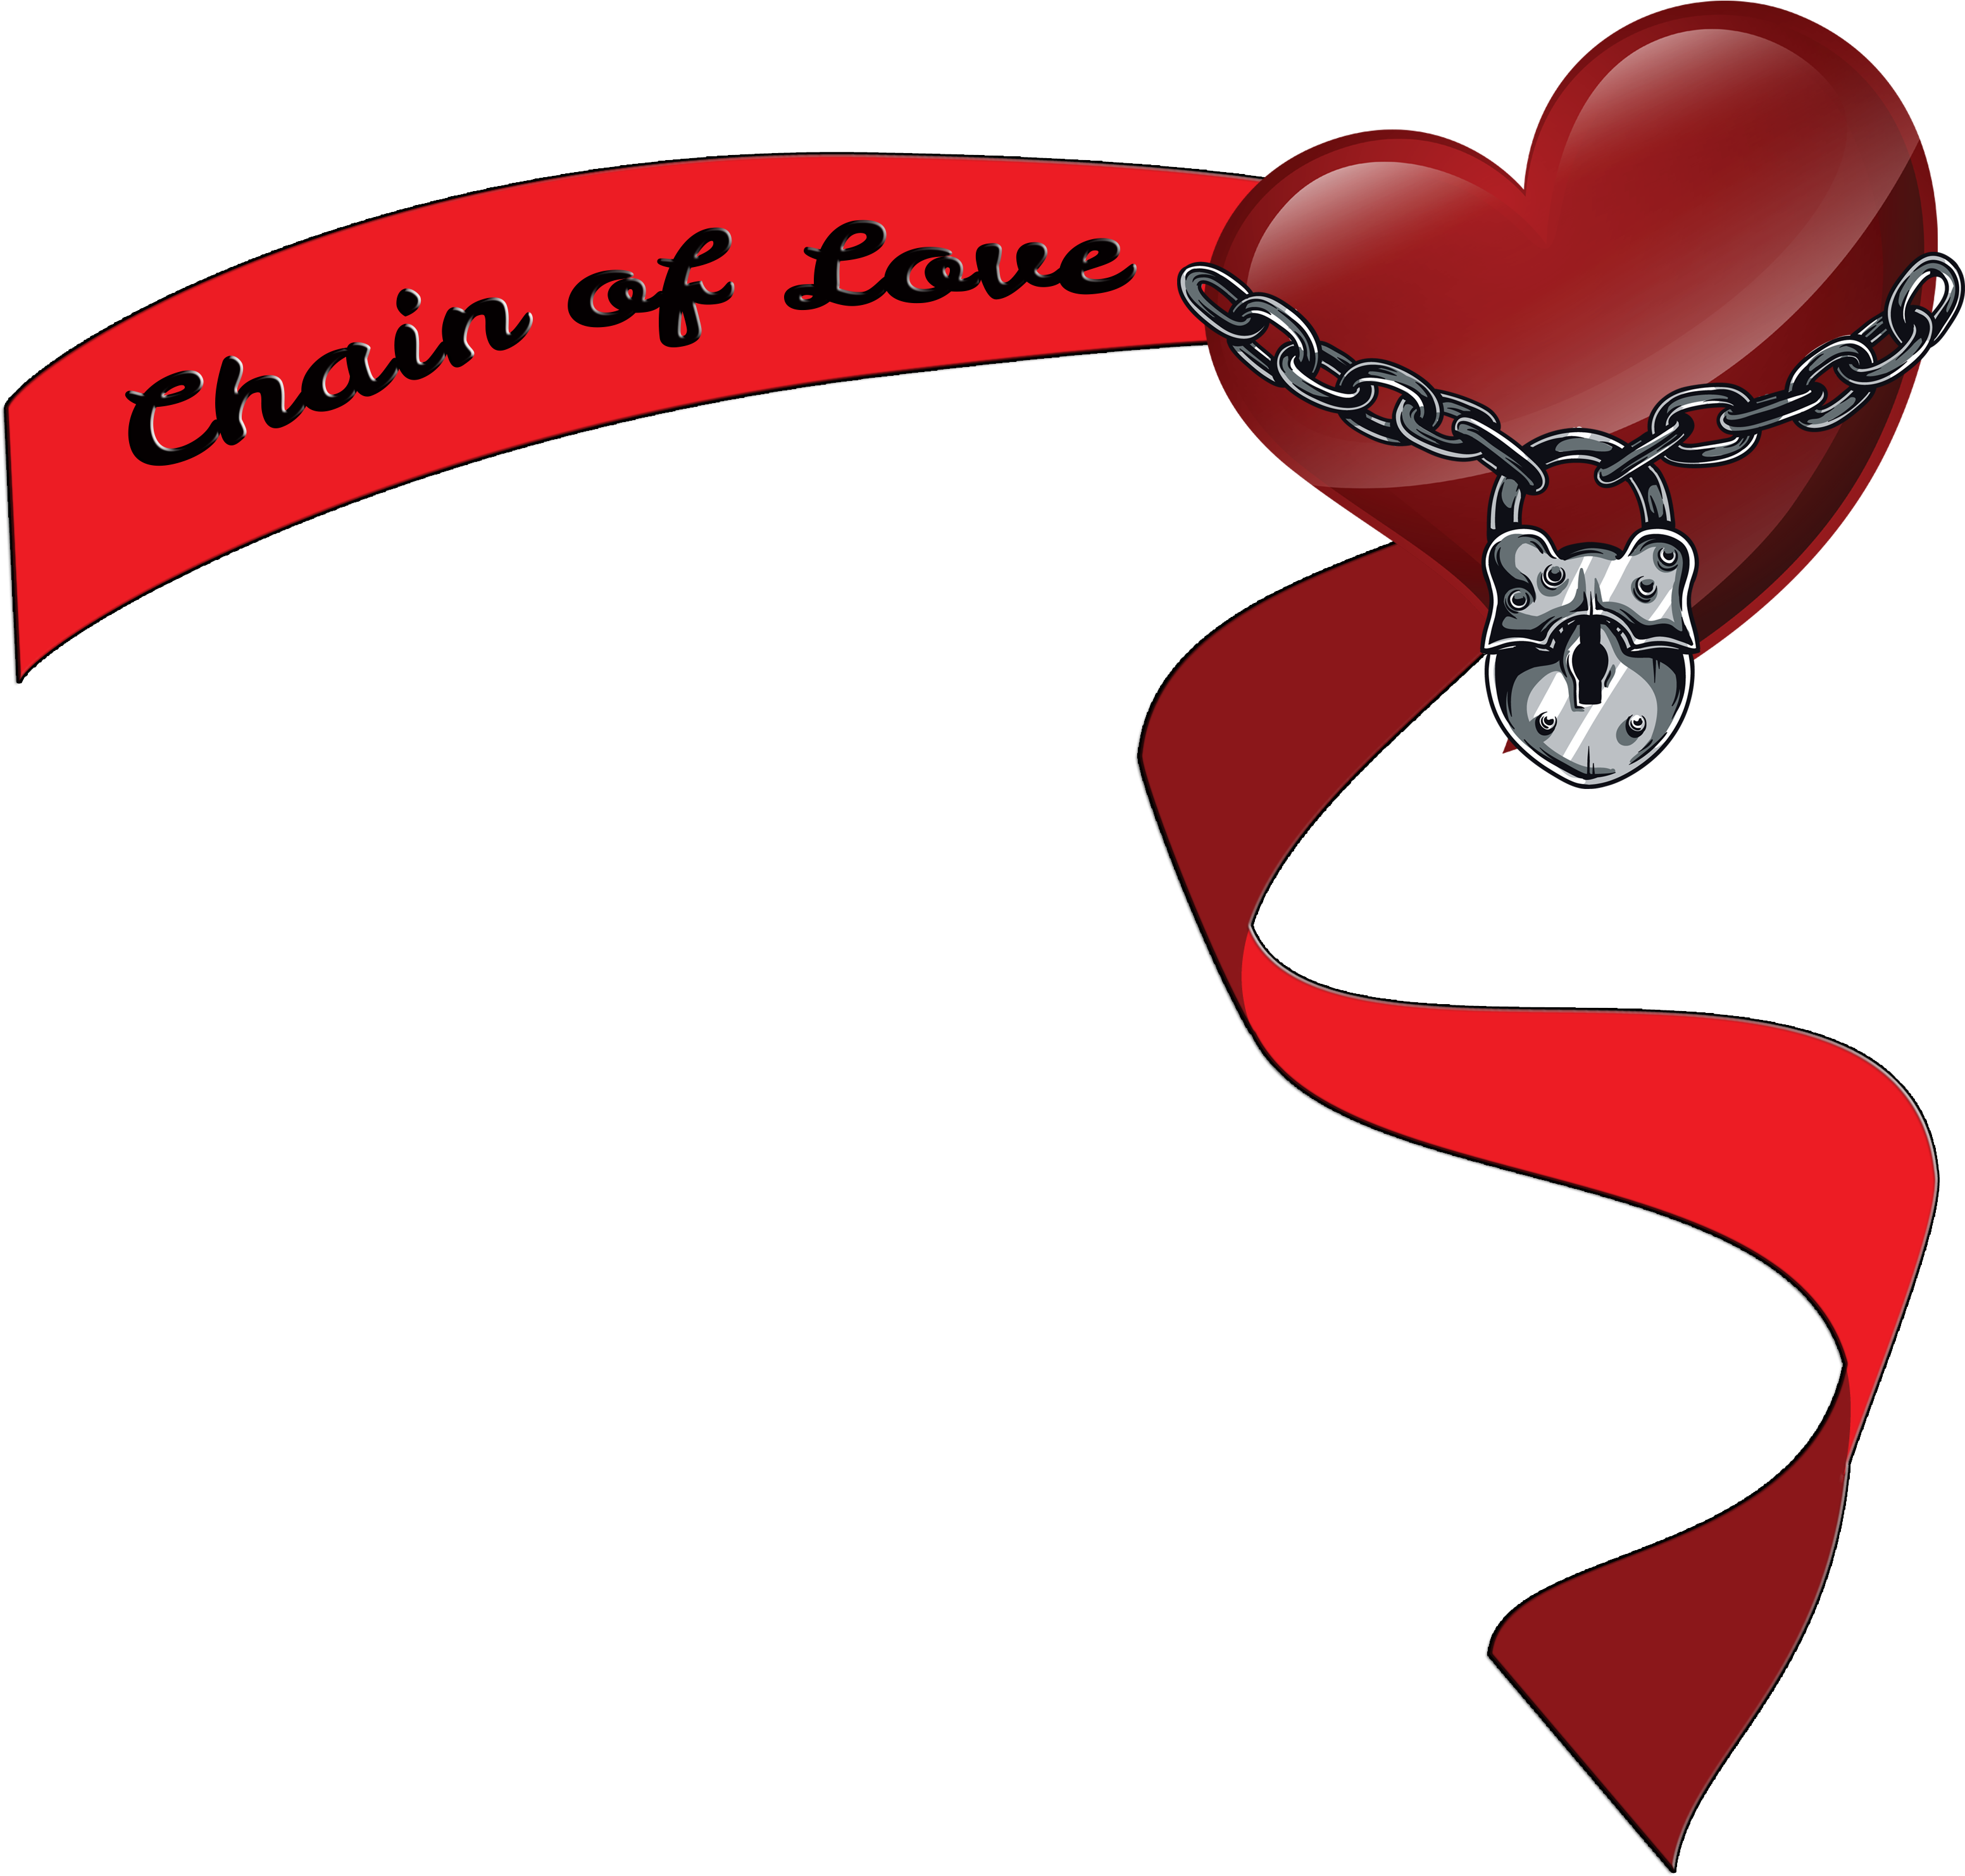 Take A Chance Chain Of Love Banner Logo - Chain Of Love (3450x3150)